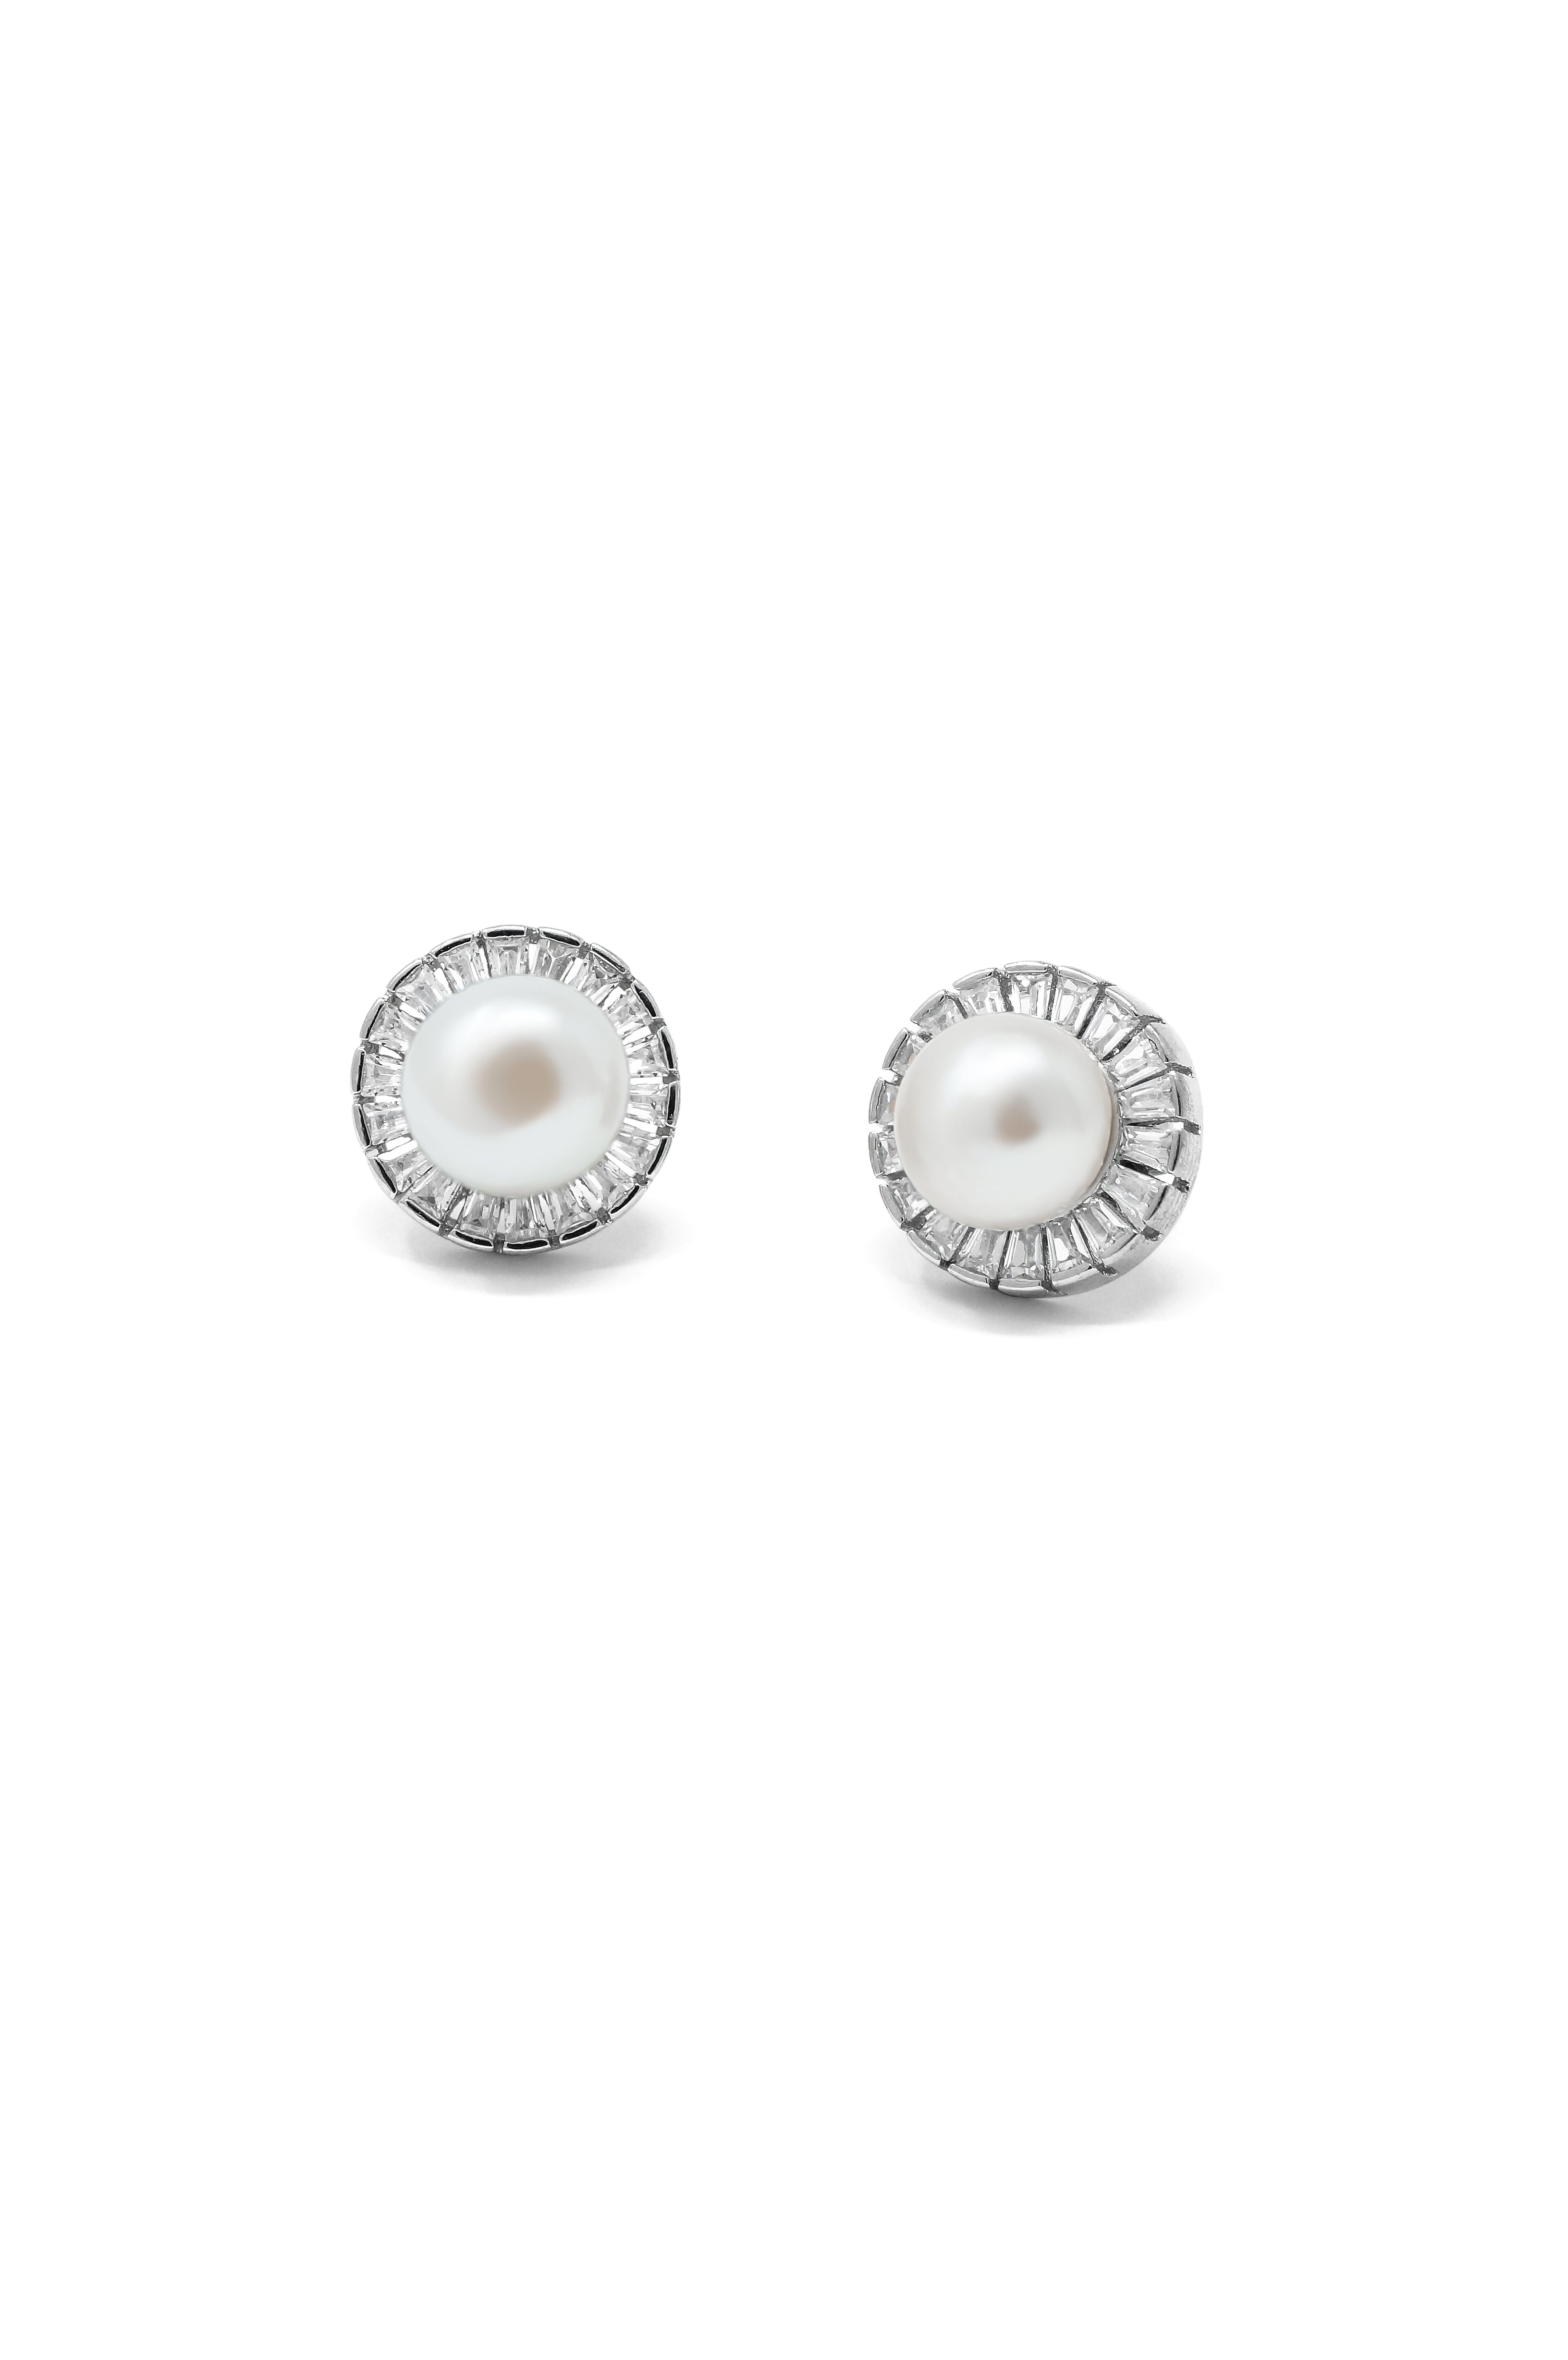 Monroe Pearl Diamond Earrings